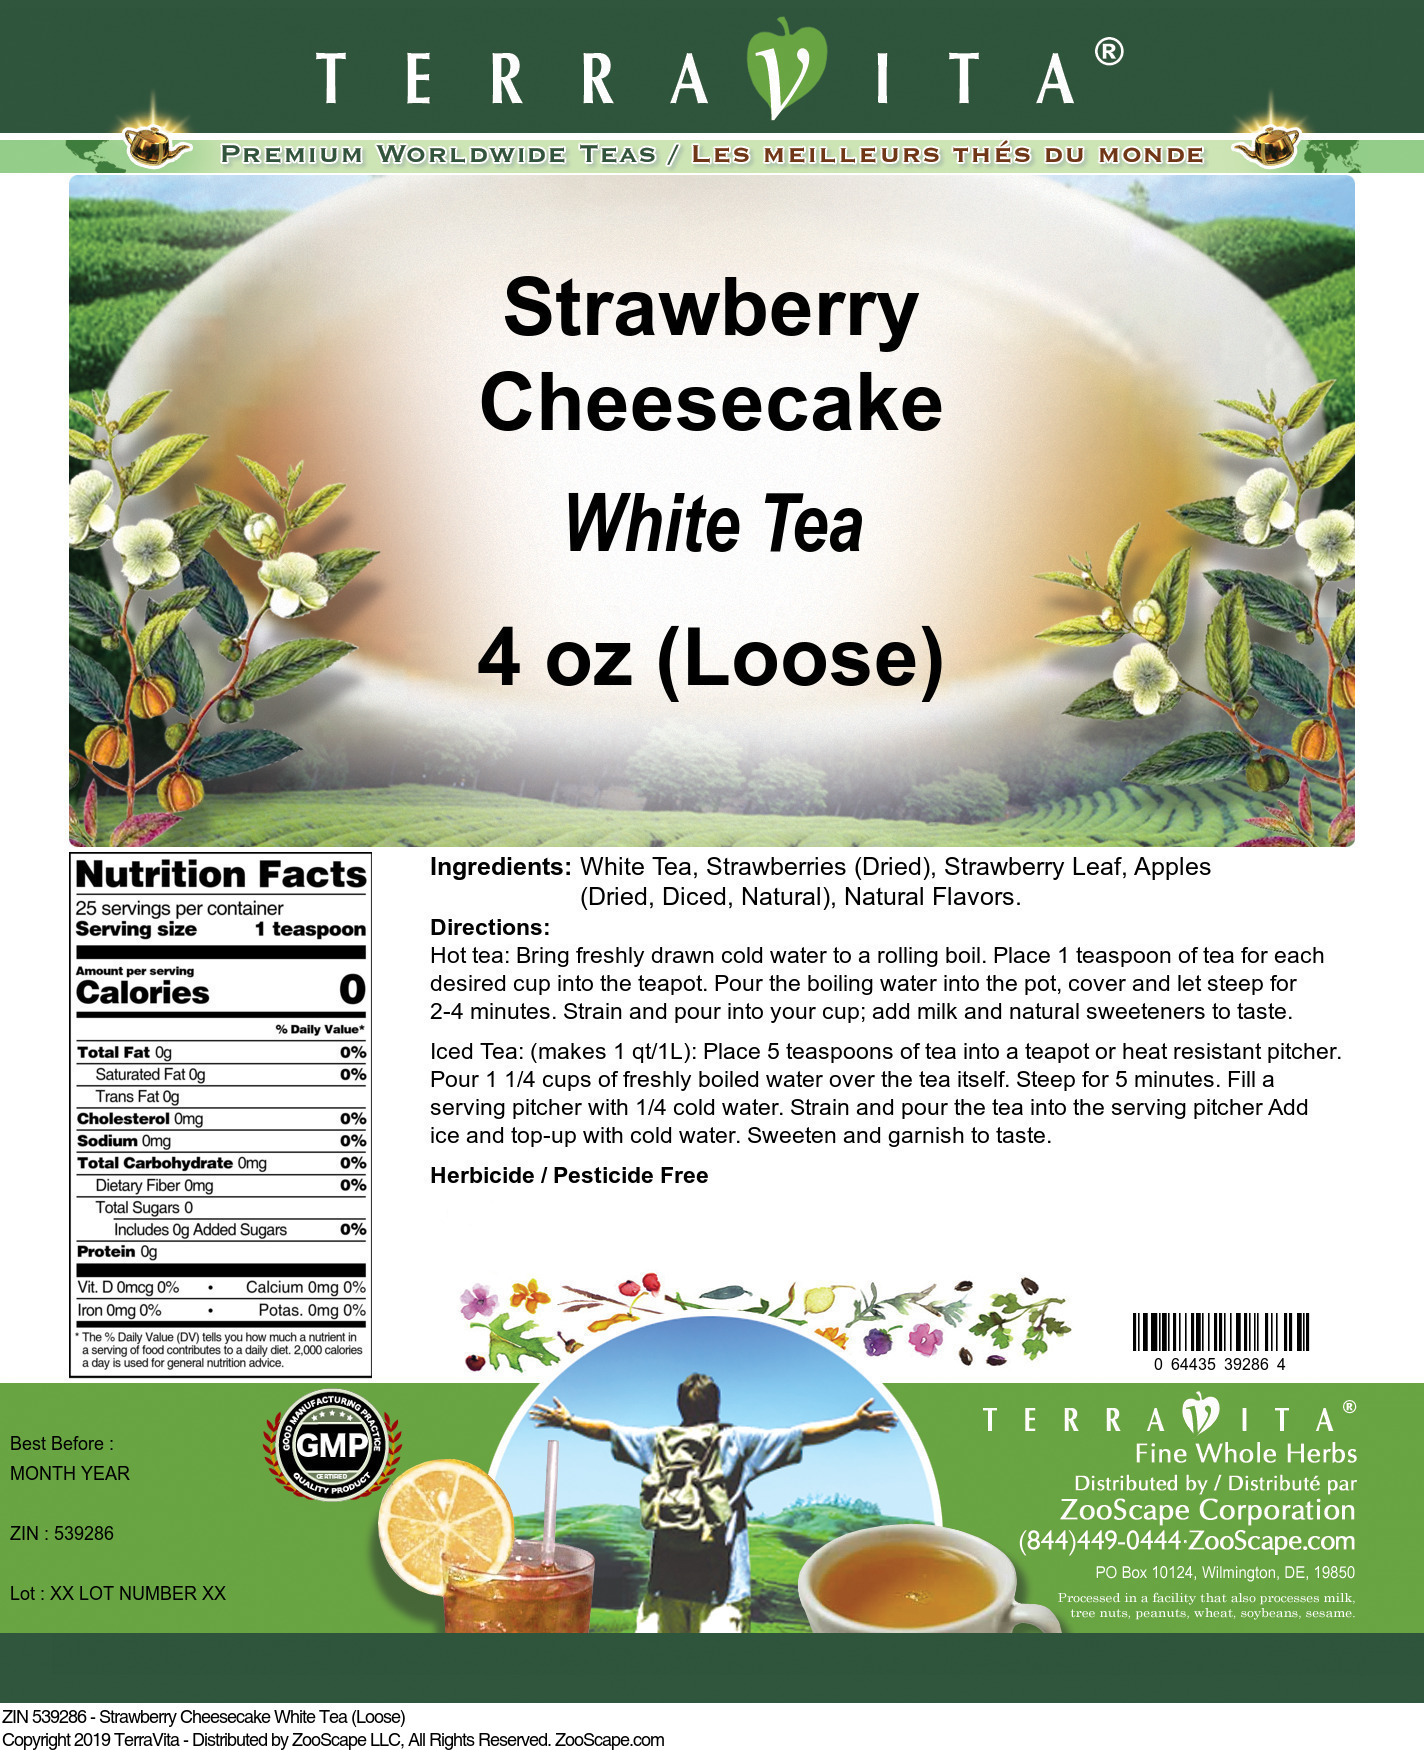 Strawberry Cheesecake White Tea (Loose) - Label